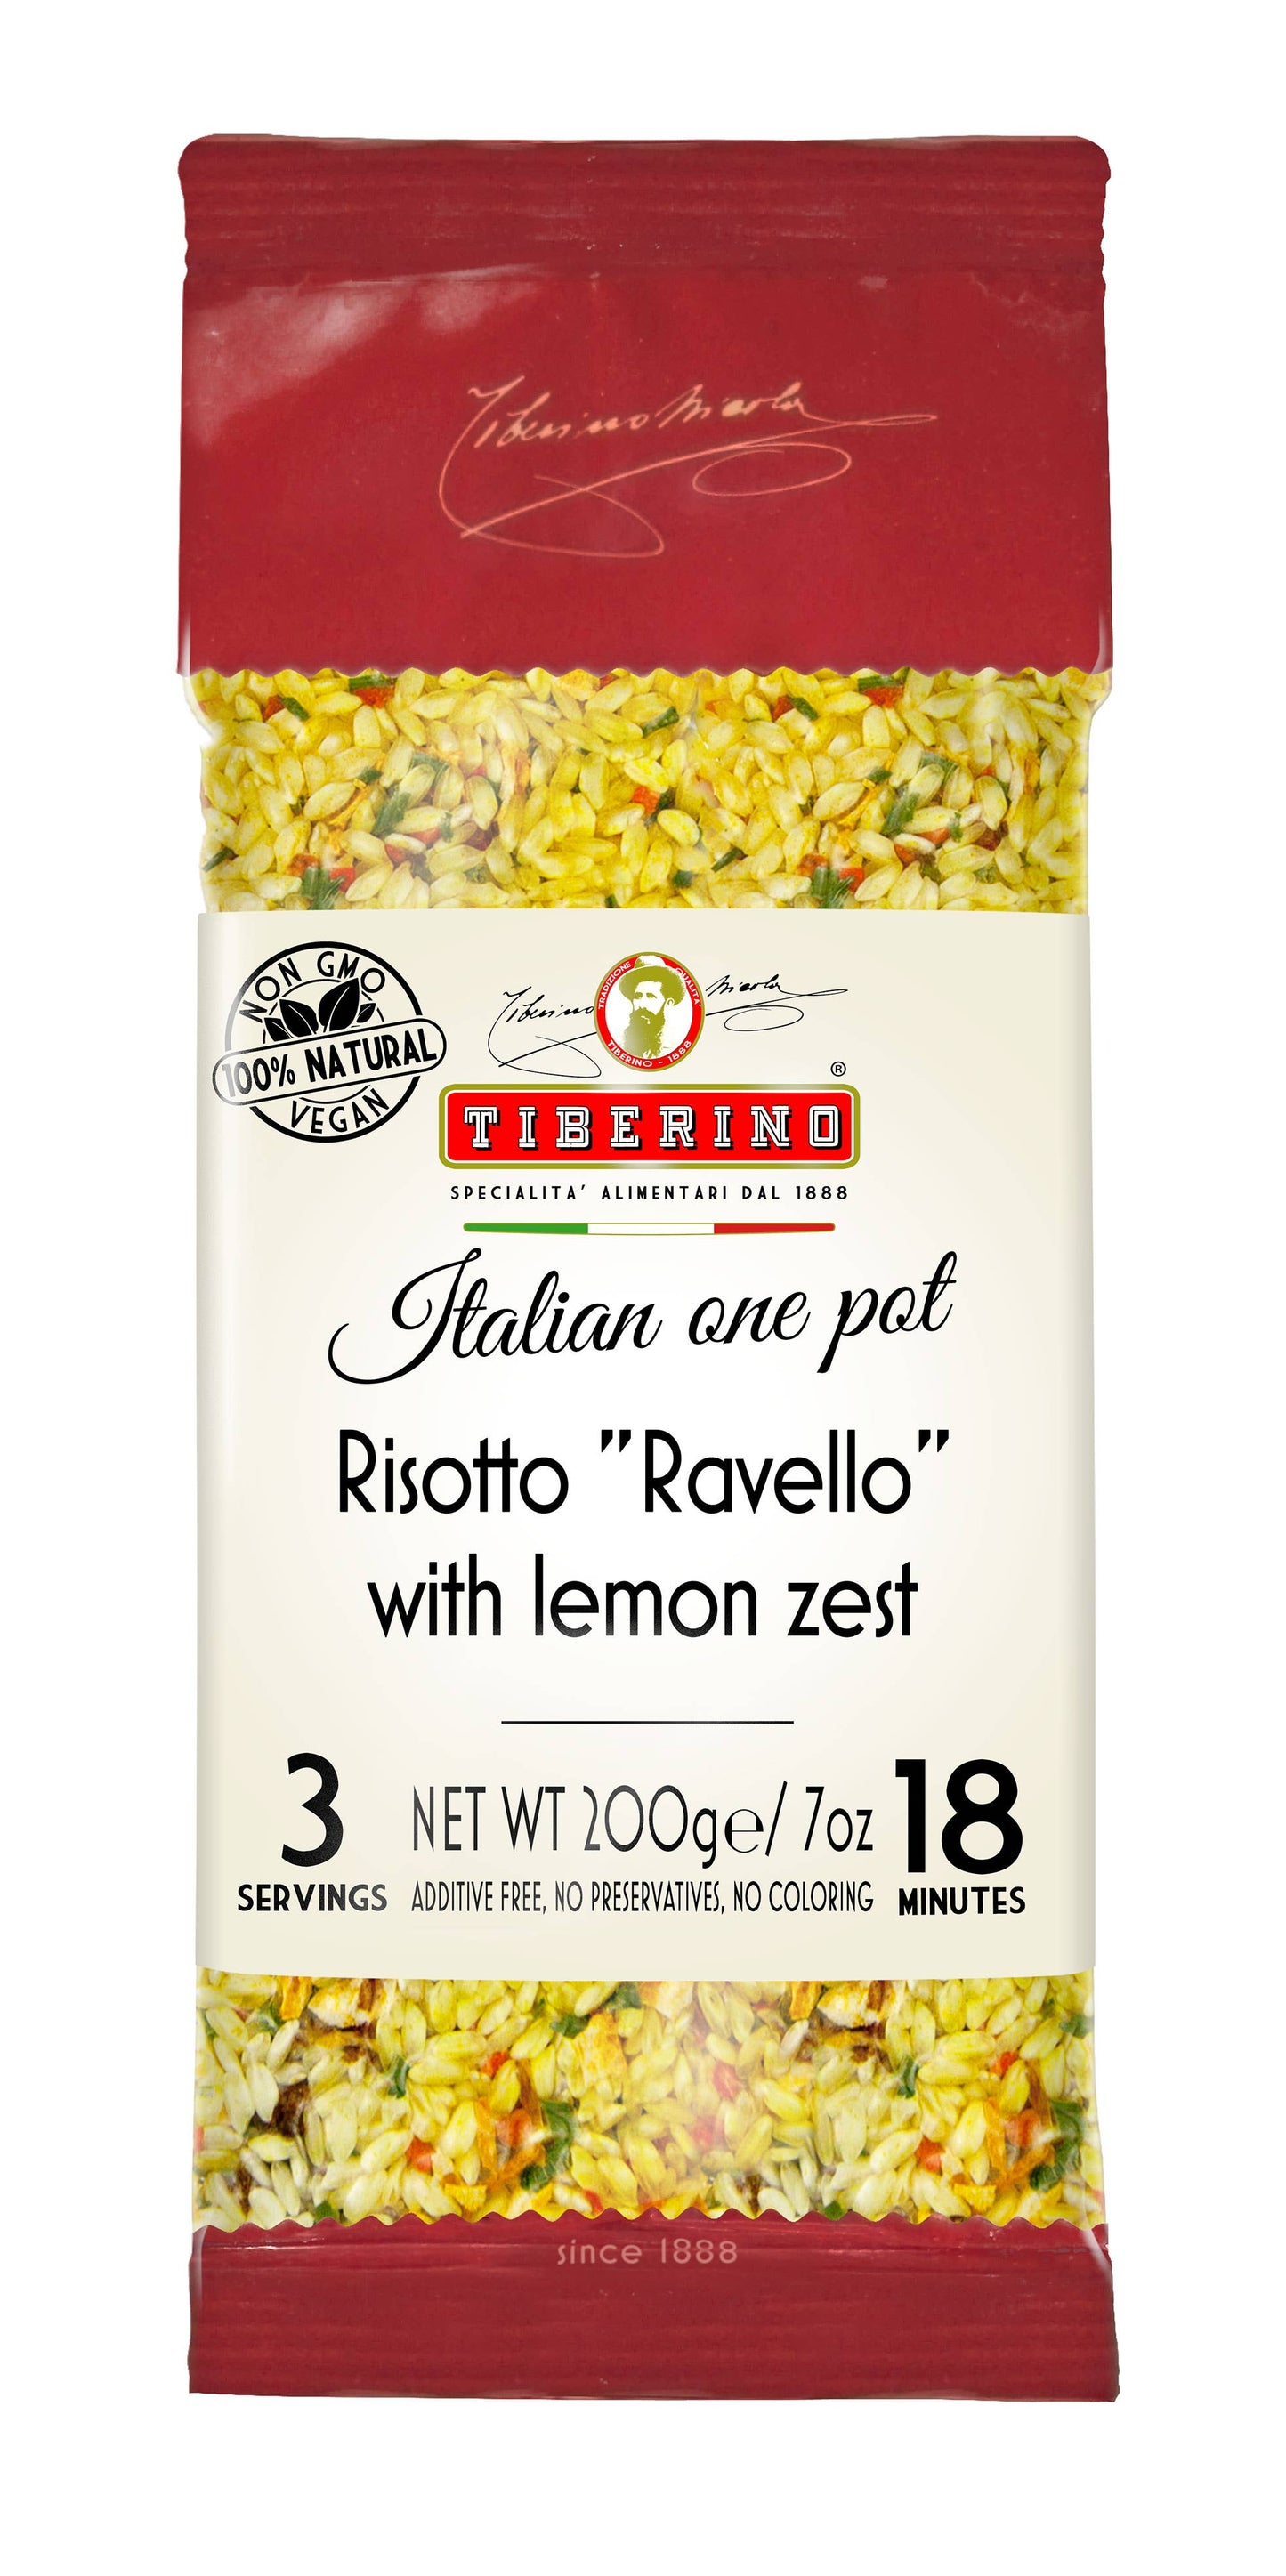 Risotto “Ravello” with Lemon